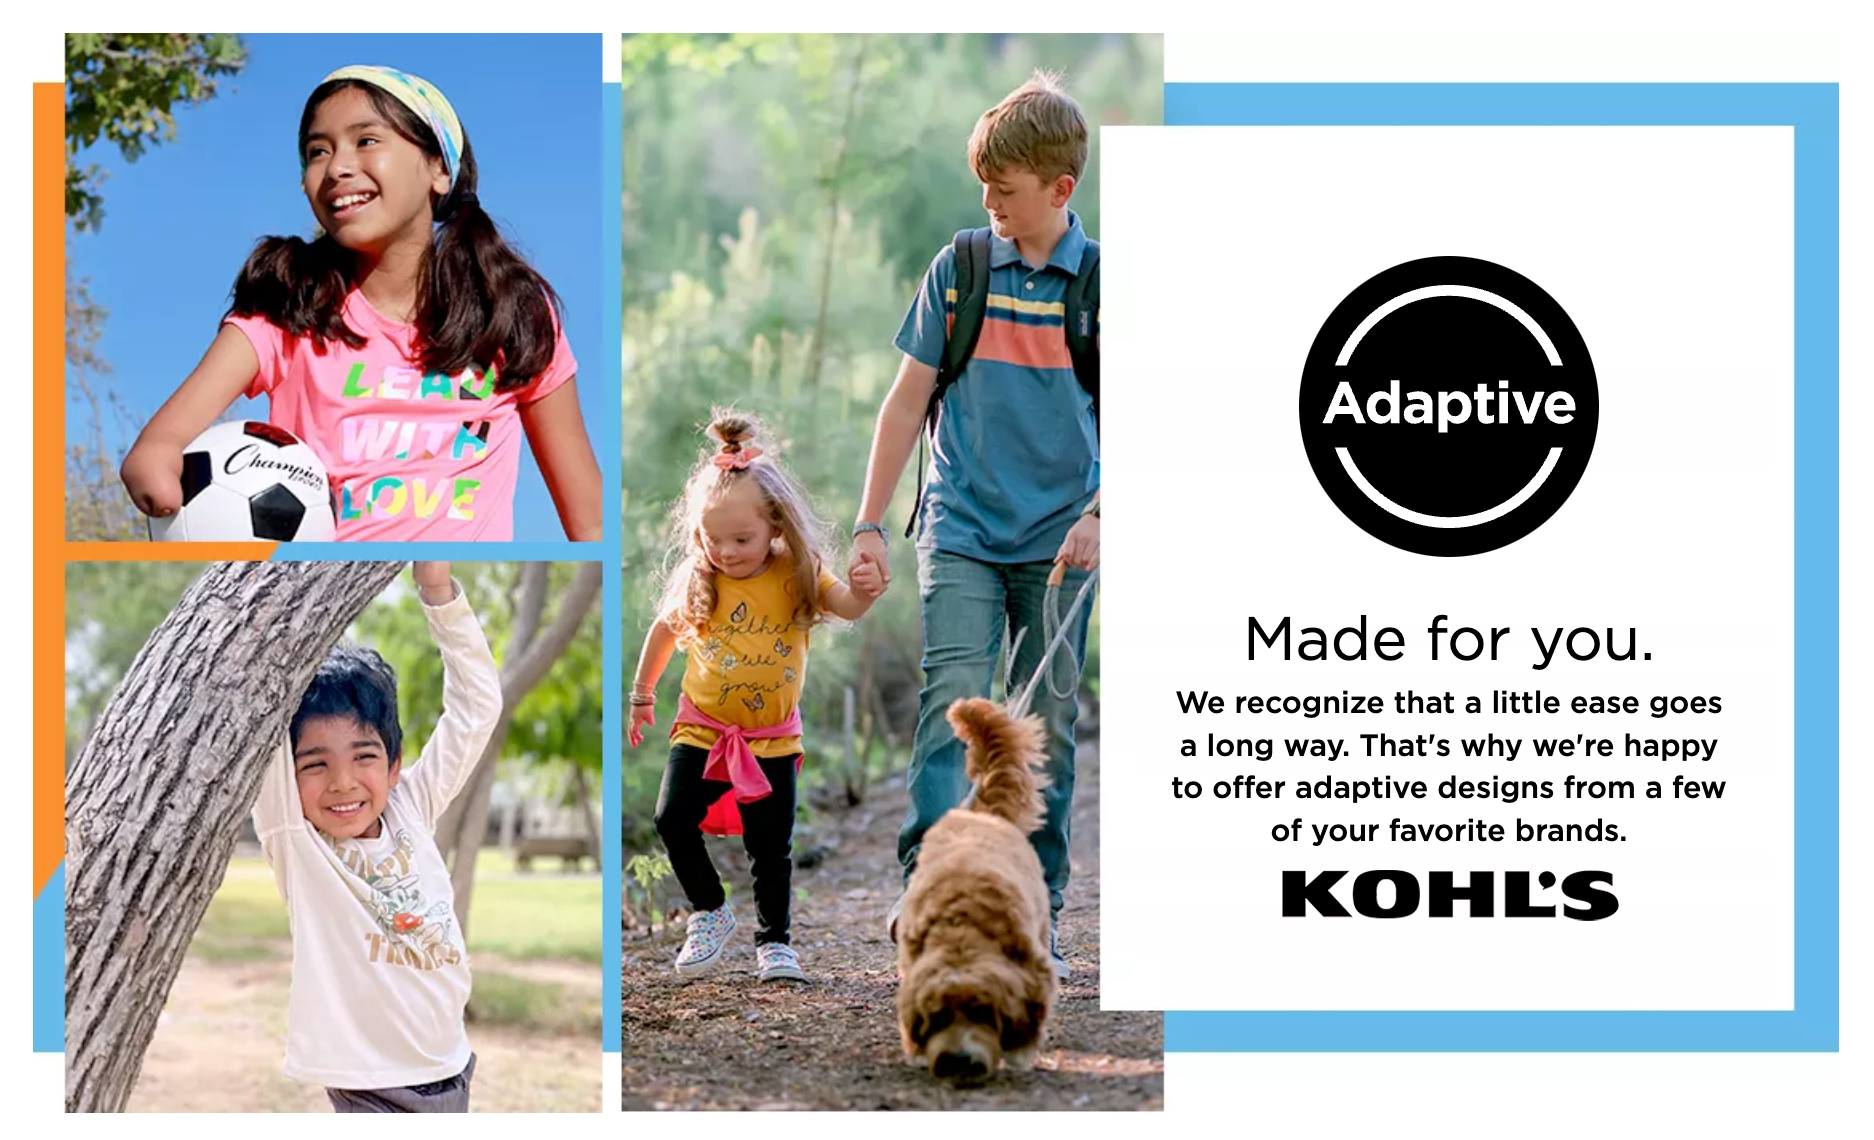 khols adaptive clothing advertisement